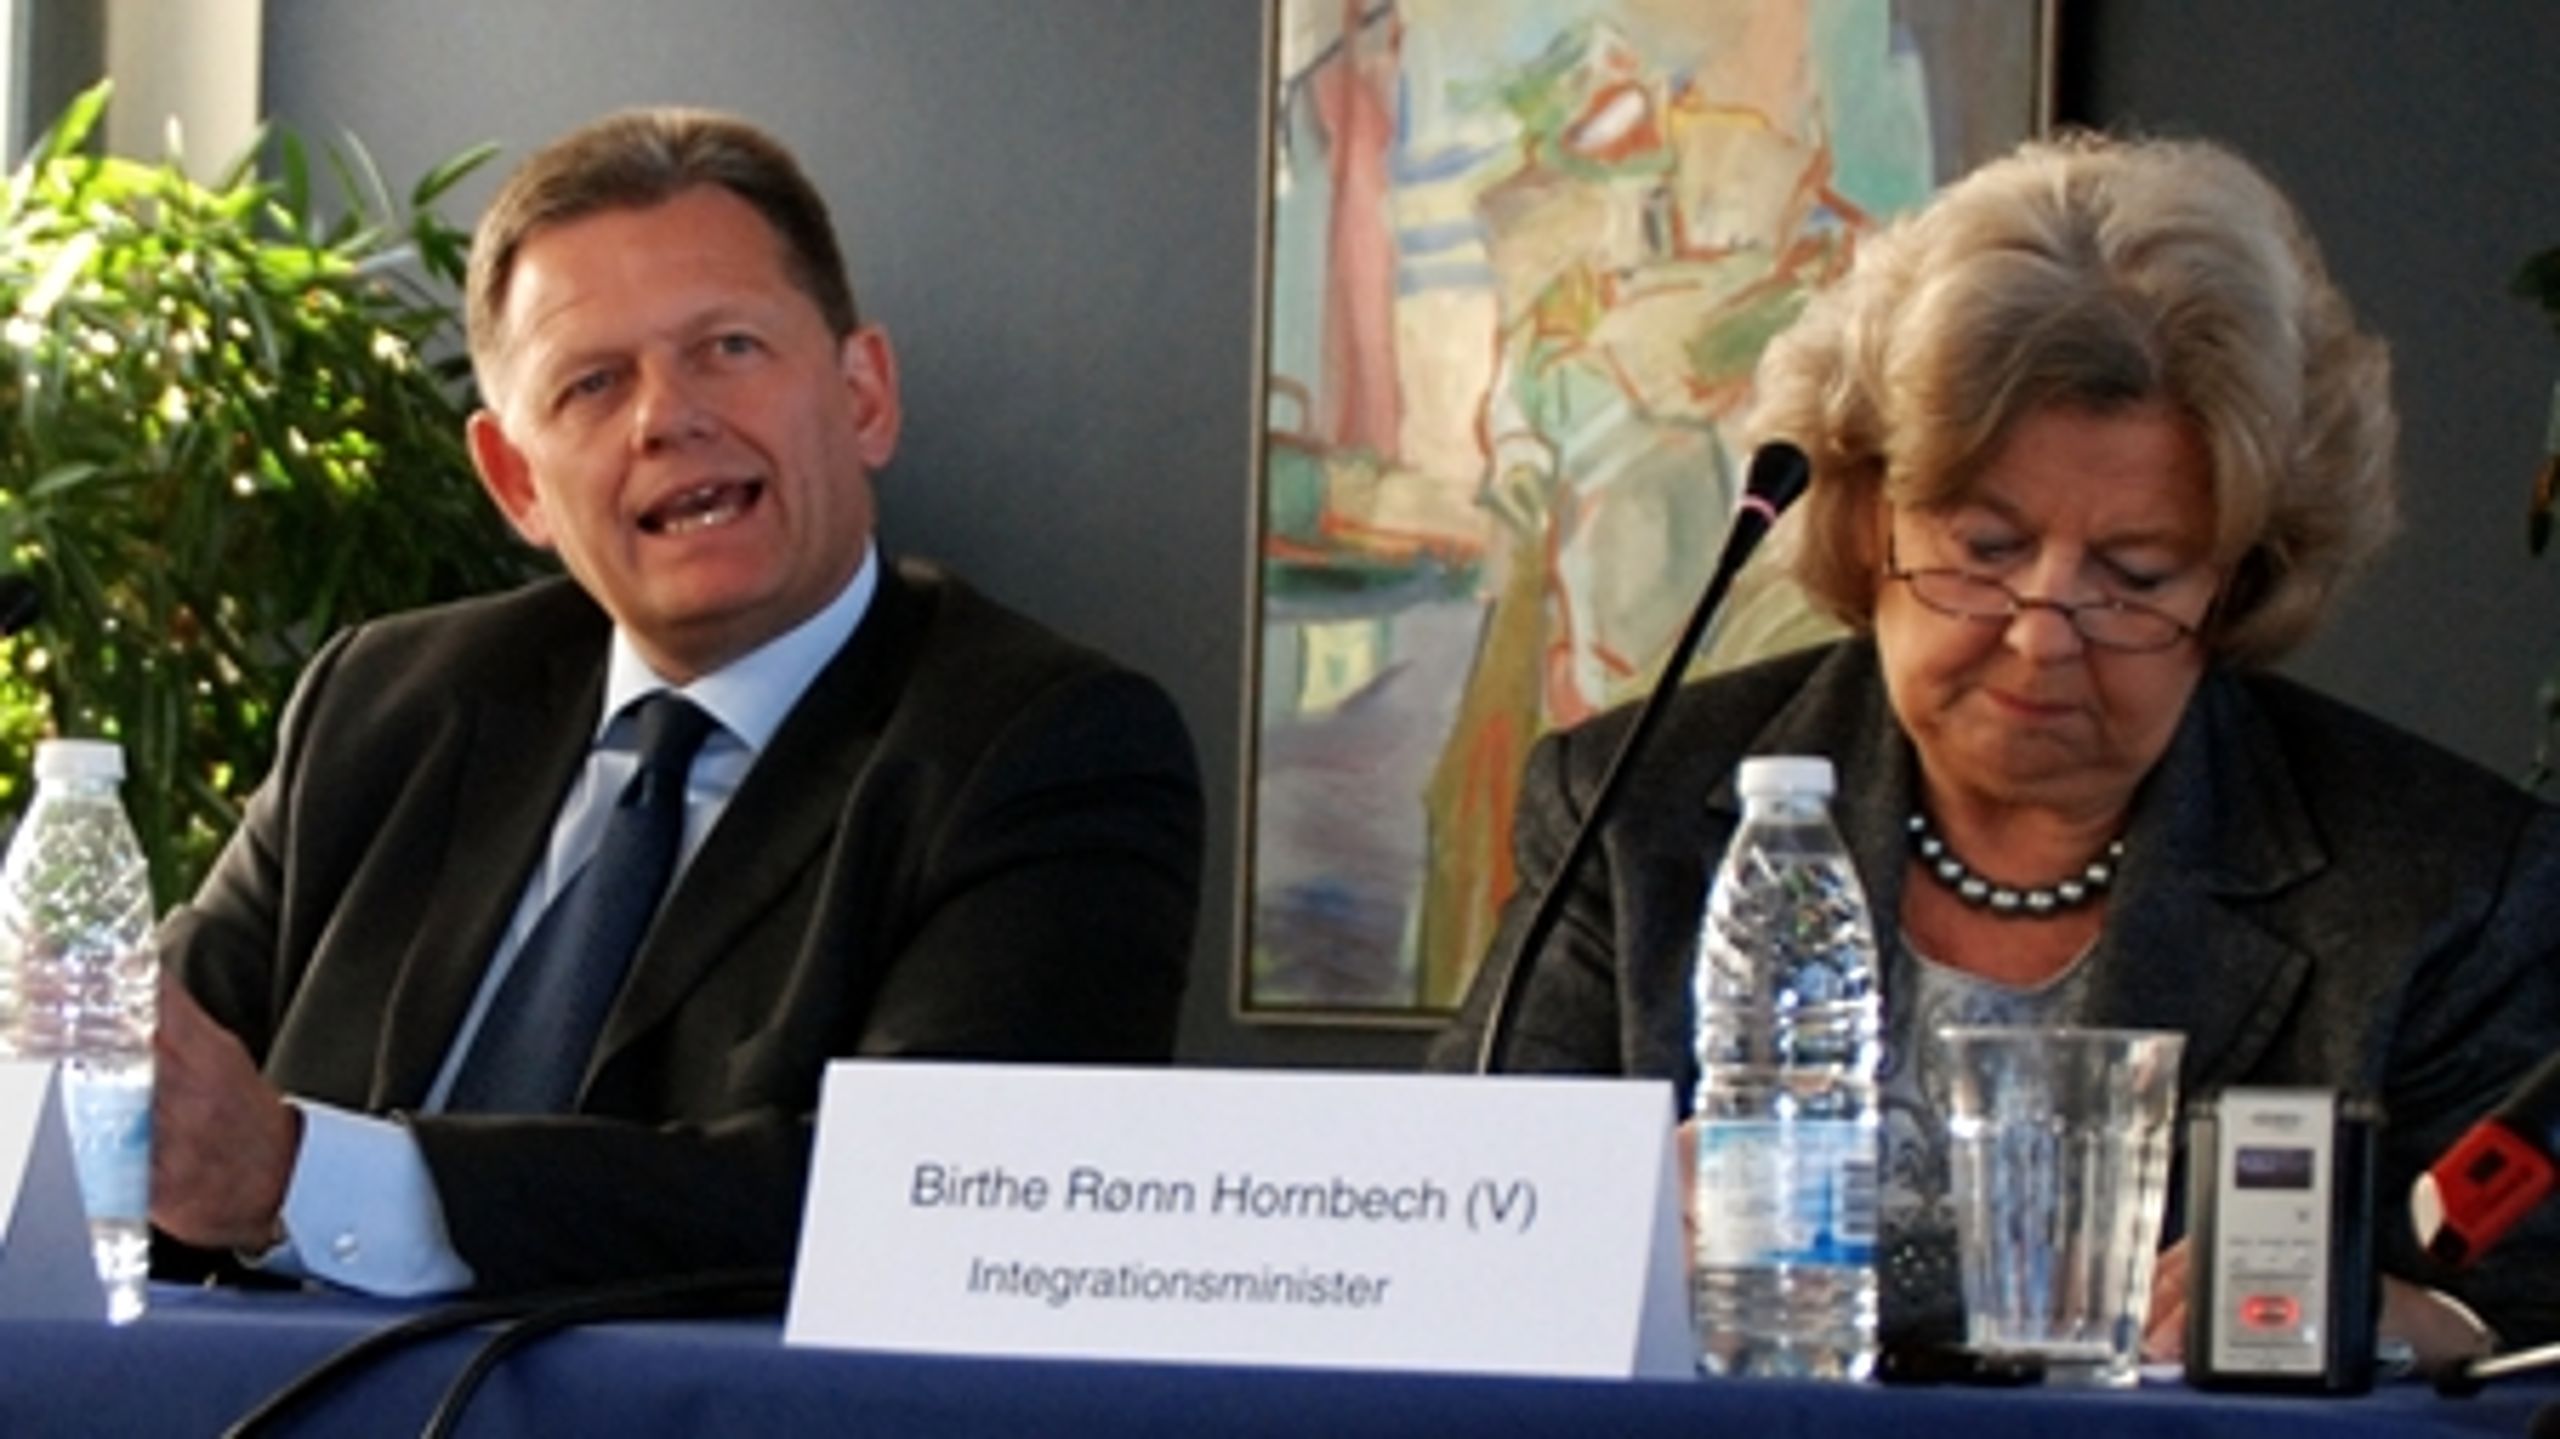 Boligpolitik var mere dagsordenen end vanligt i dette folketingsår. Her ses Lars Barfoed (K) og Birthe Rønn Hornbech (V) ved præsentationen af regeringens ghetto-strategi.